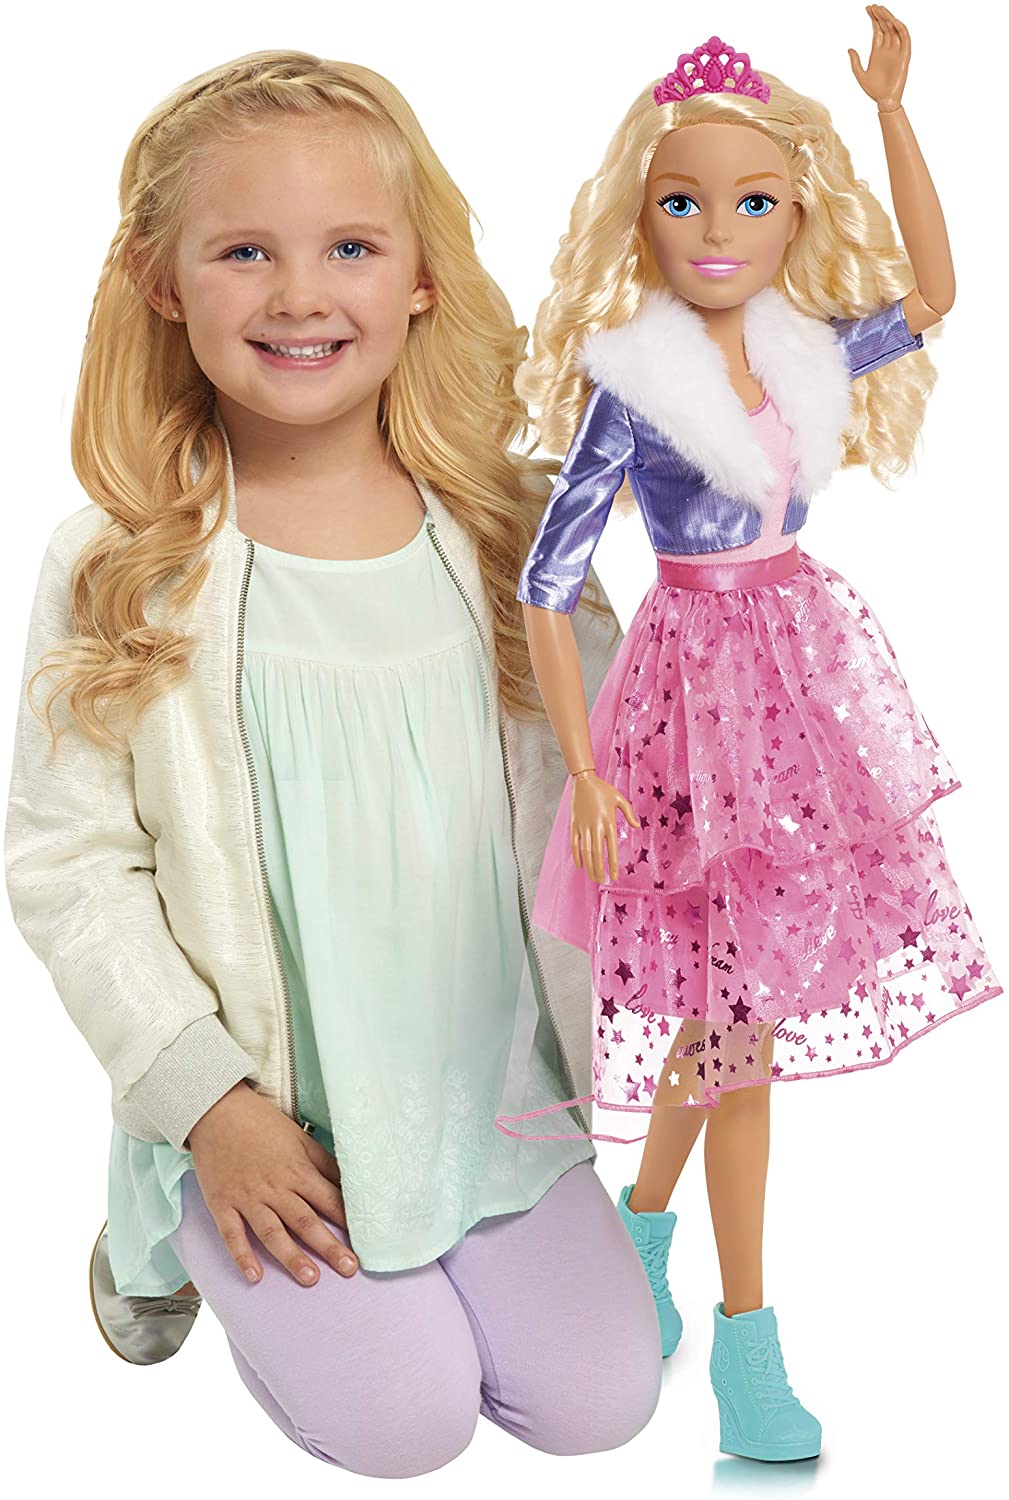 28 inch barbie doll amazon